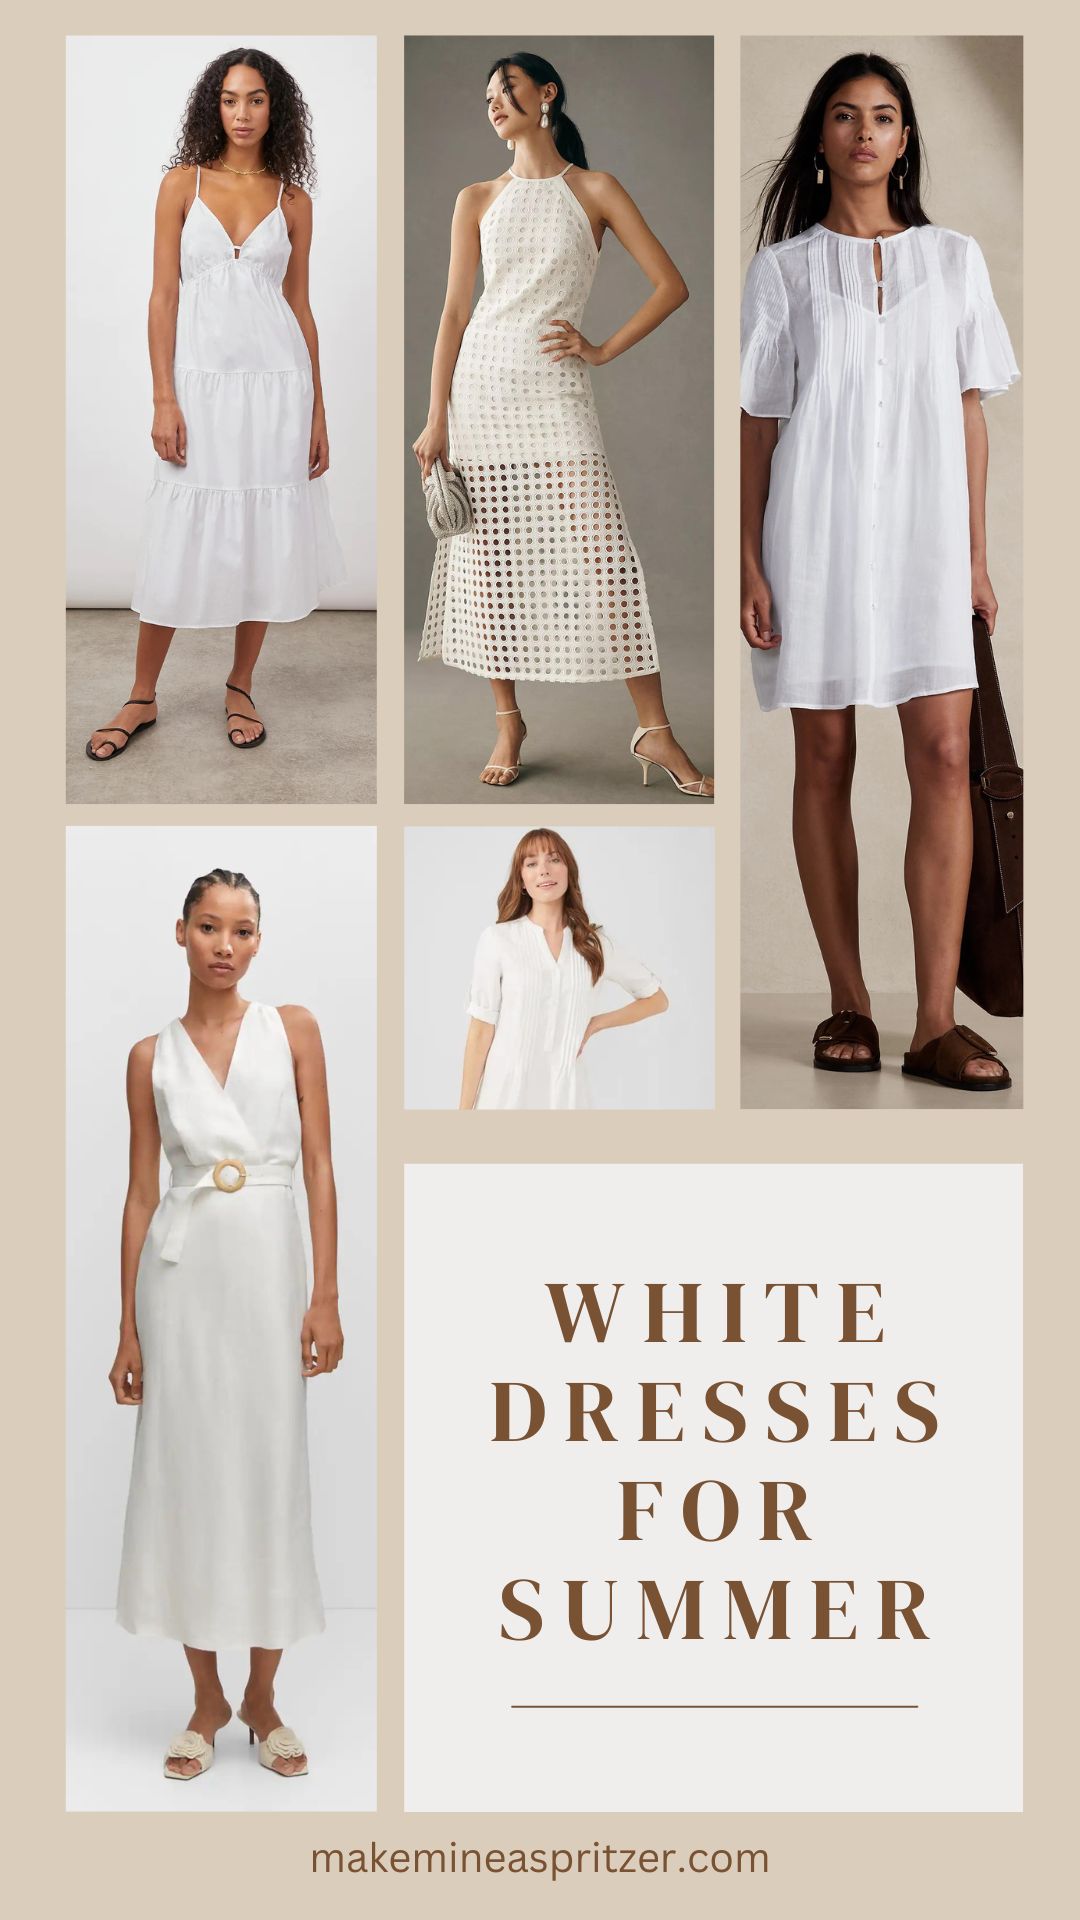 White Dresses for Summer Collage.